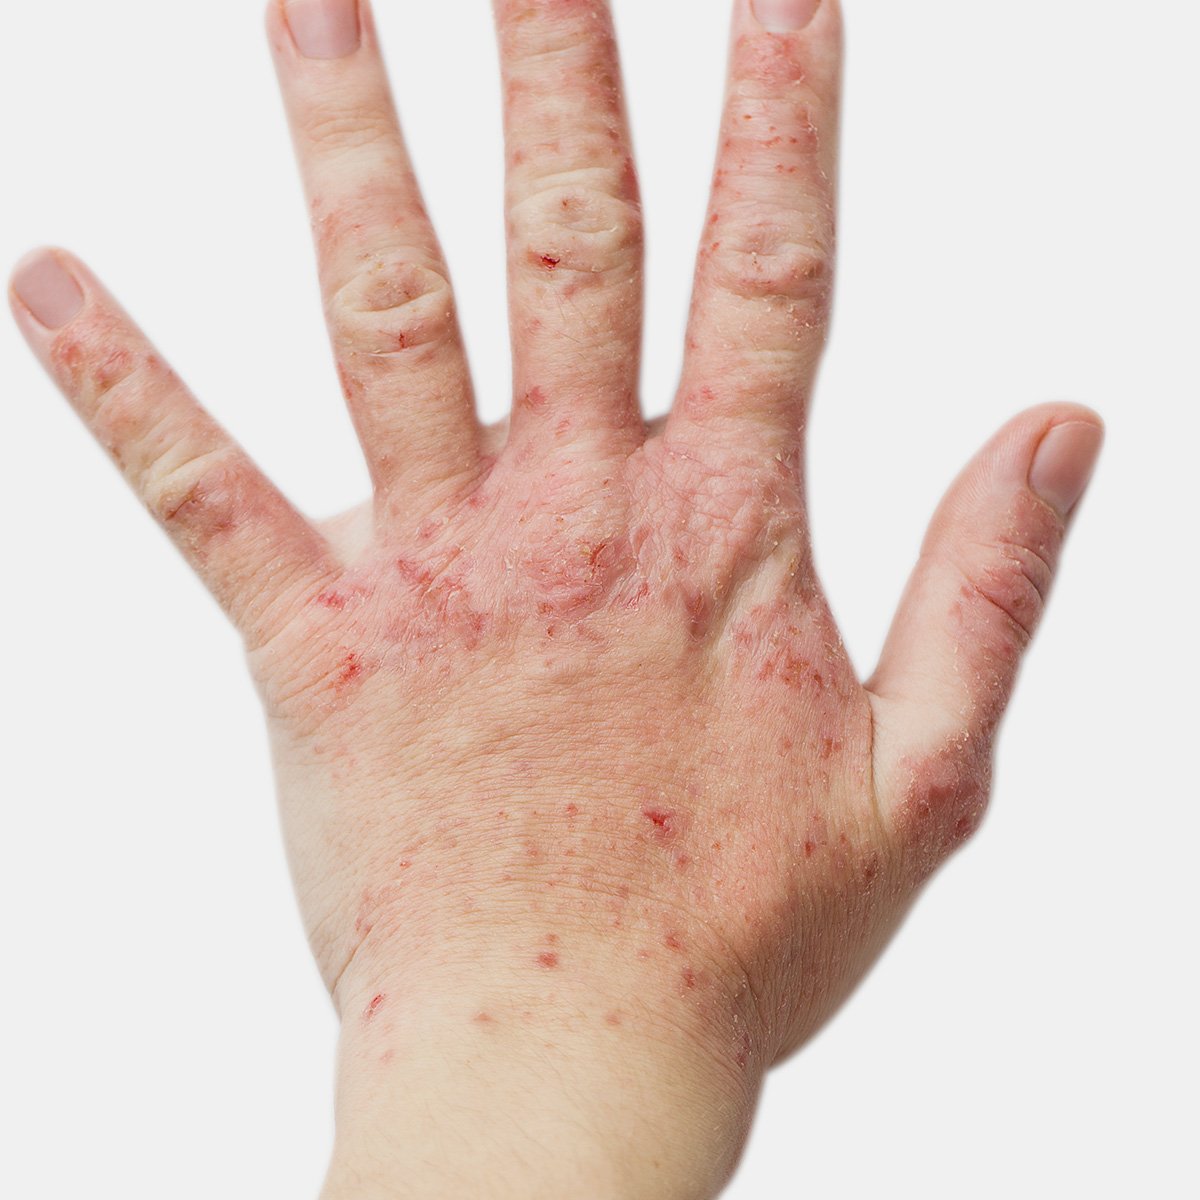 Eczemas